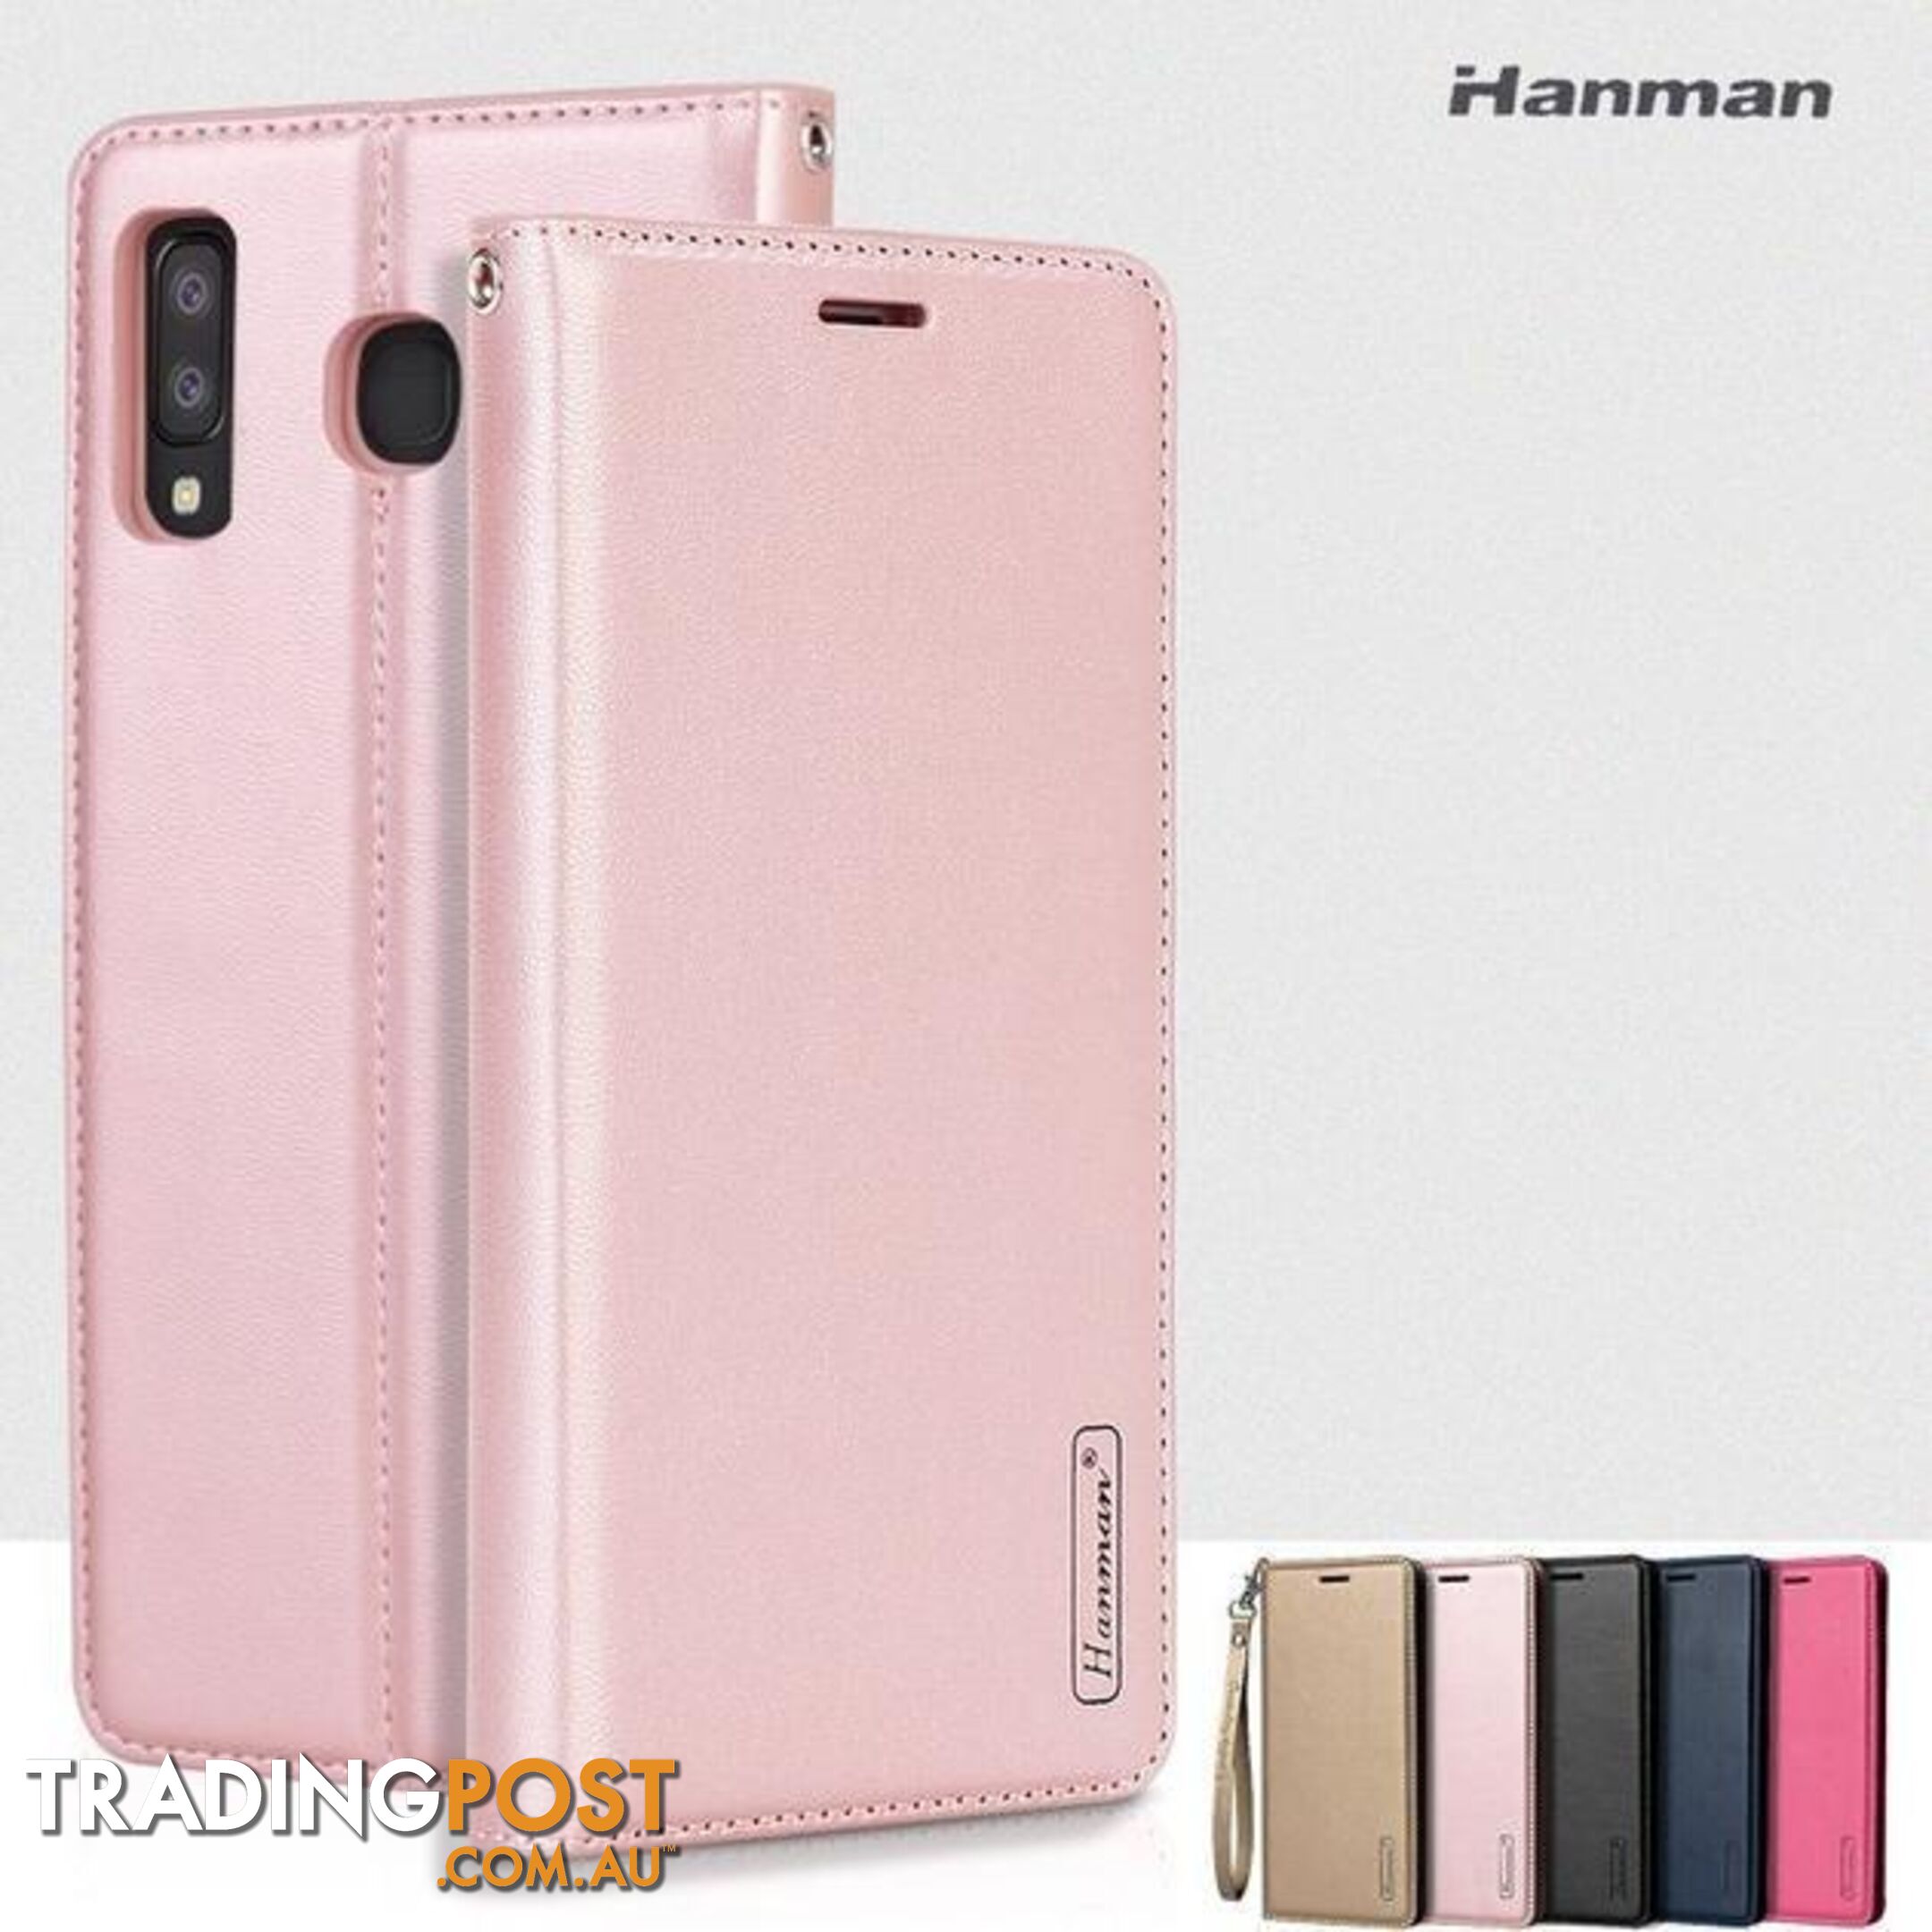 Samsung Galaxy Hanman Wallet Style Cases - 100837 - Cases